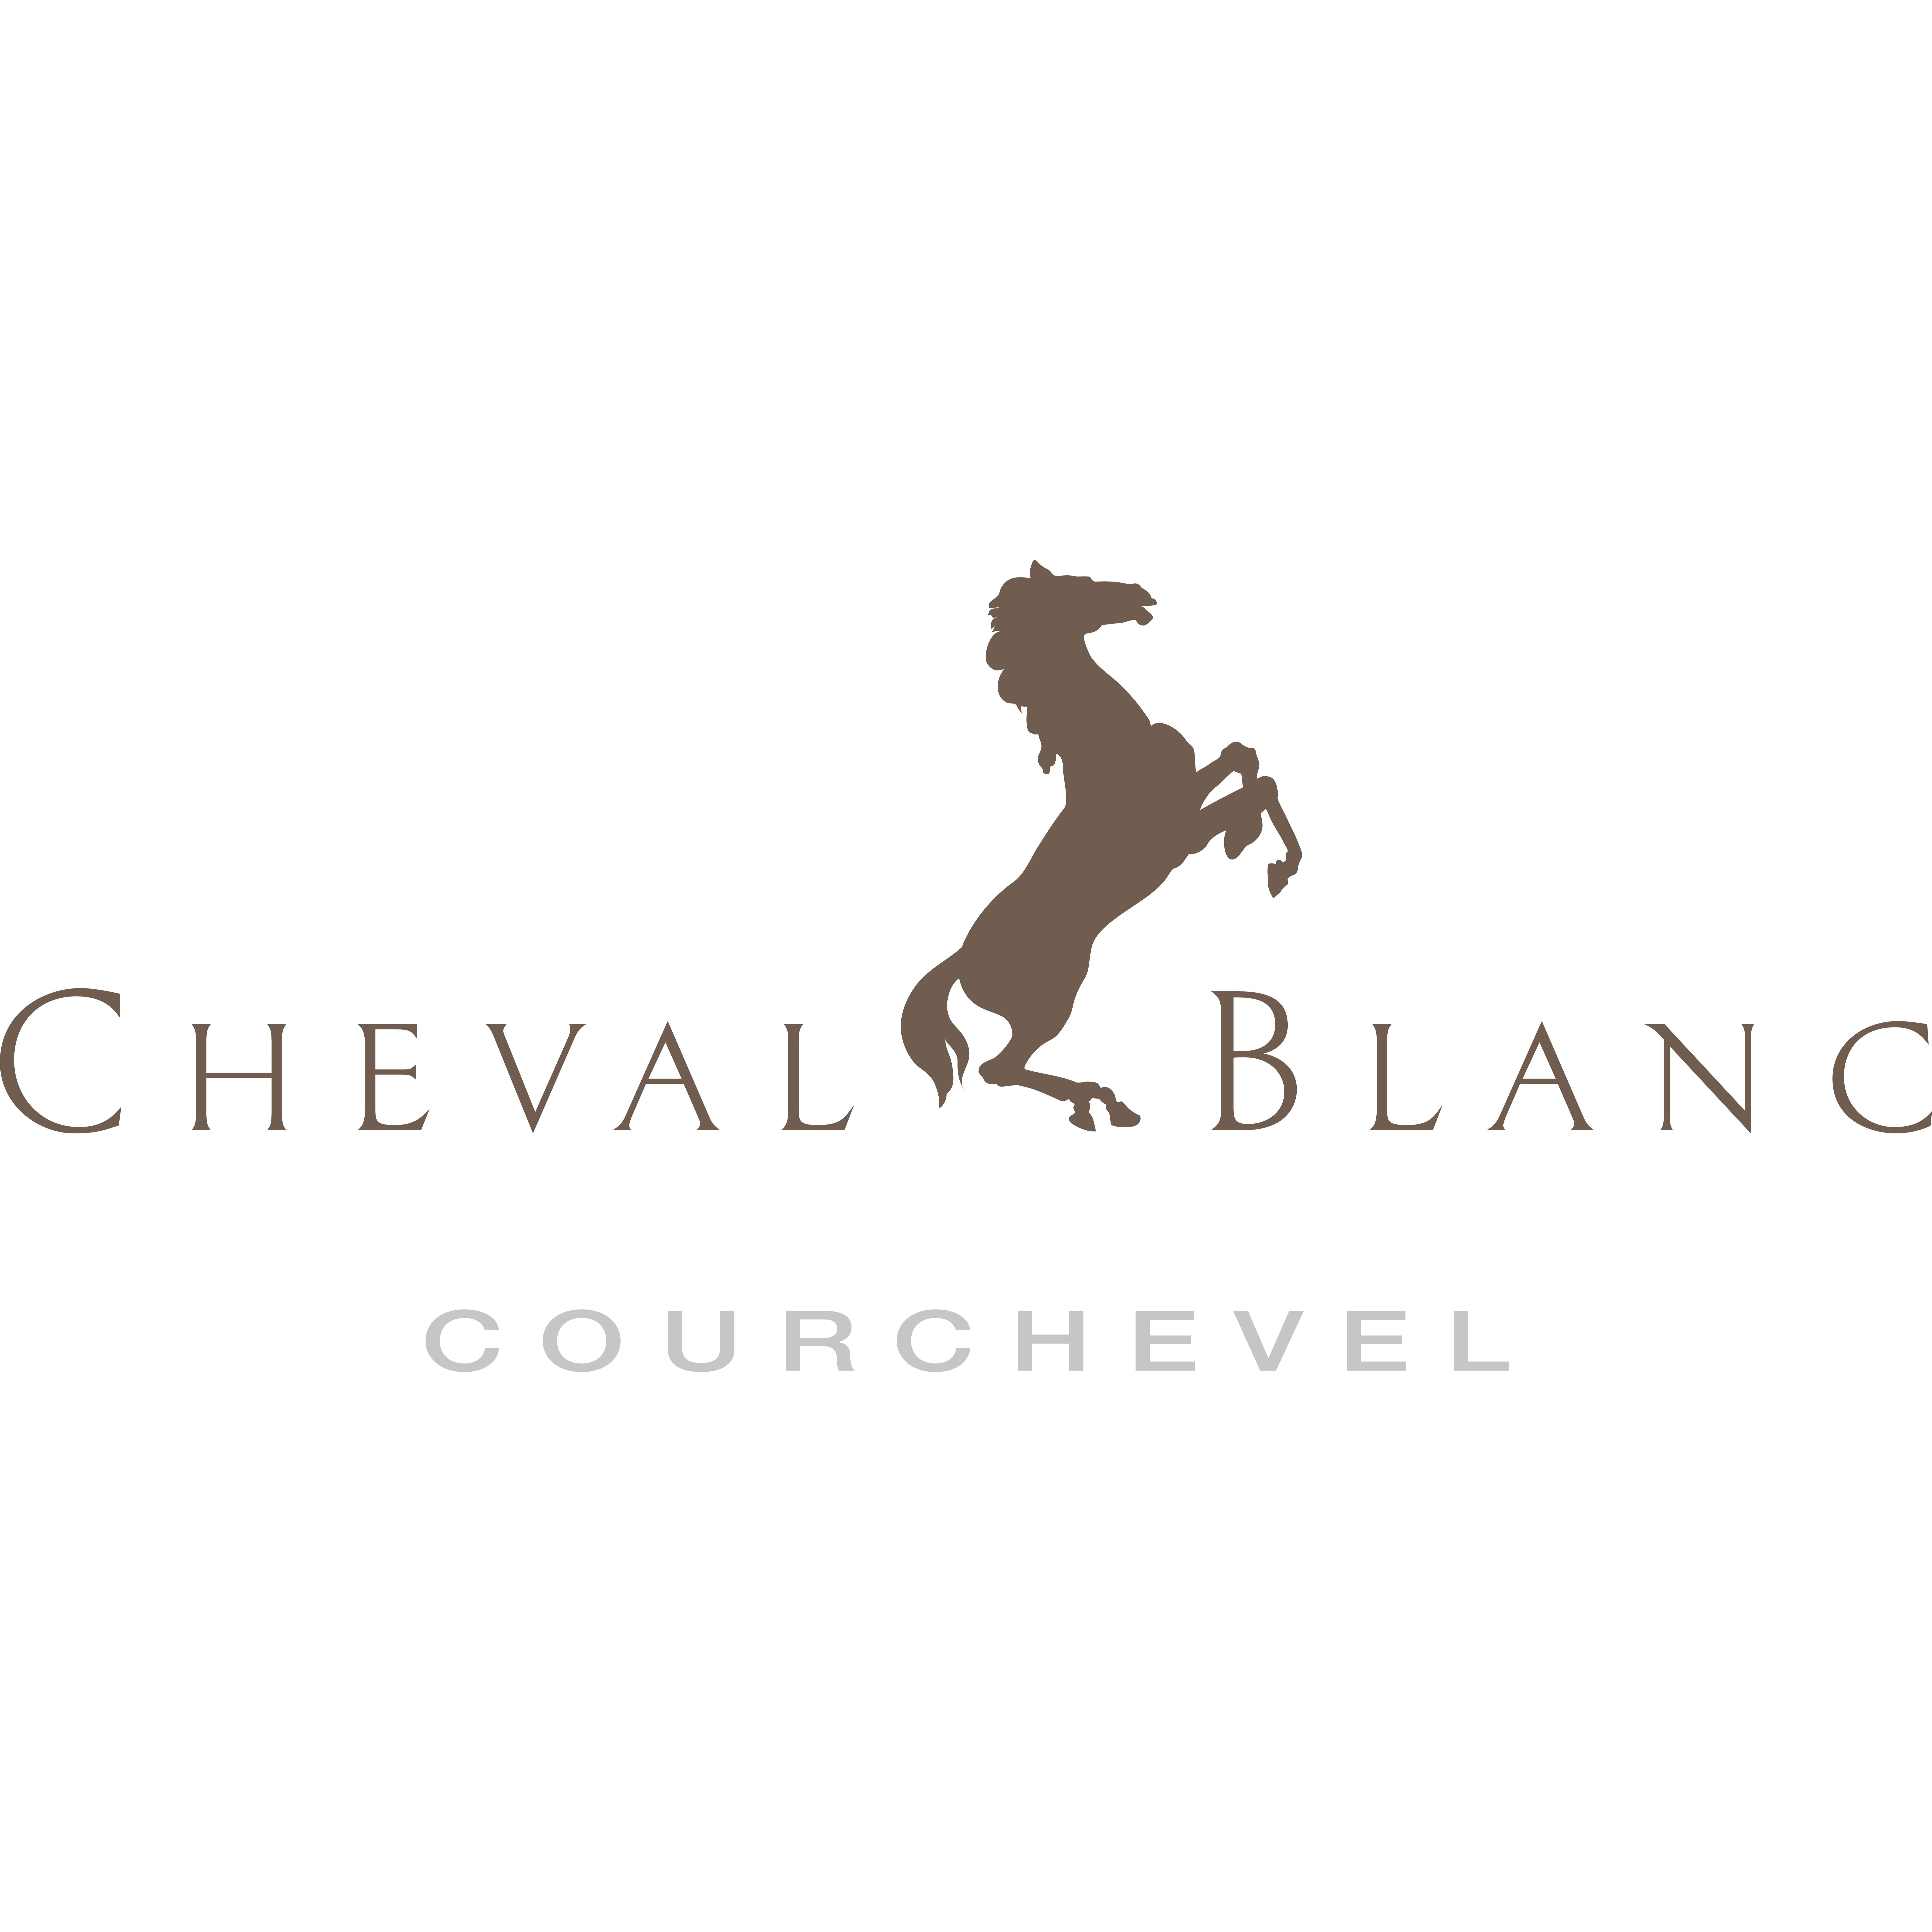 Cheval Blanc Courchevel Logo